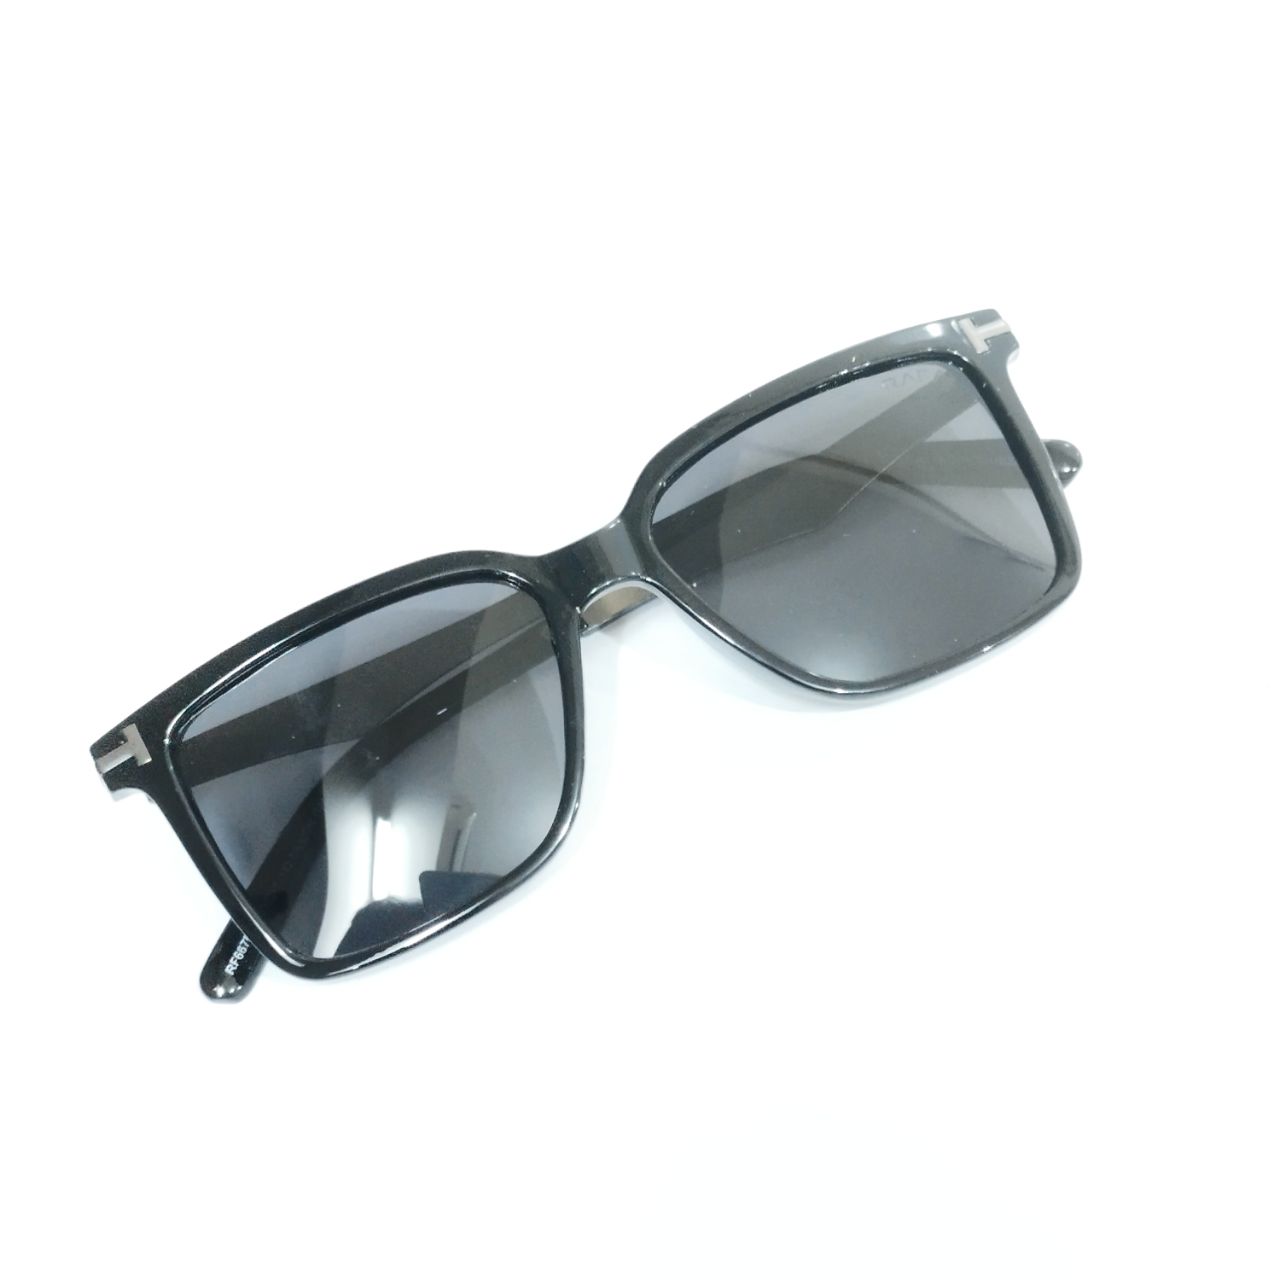 Black Rectangle Polarized Sunglasses for Men and Women